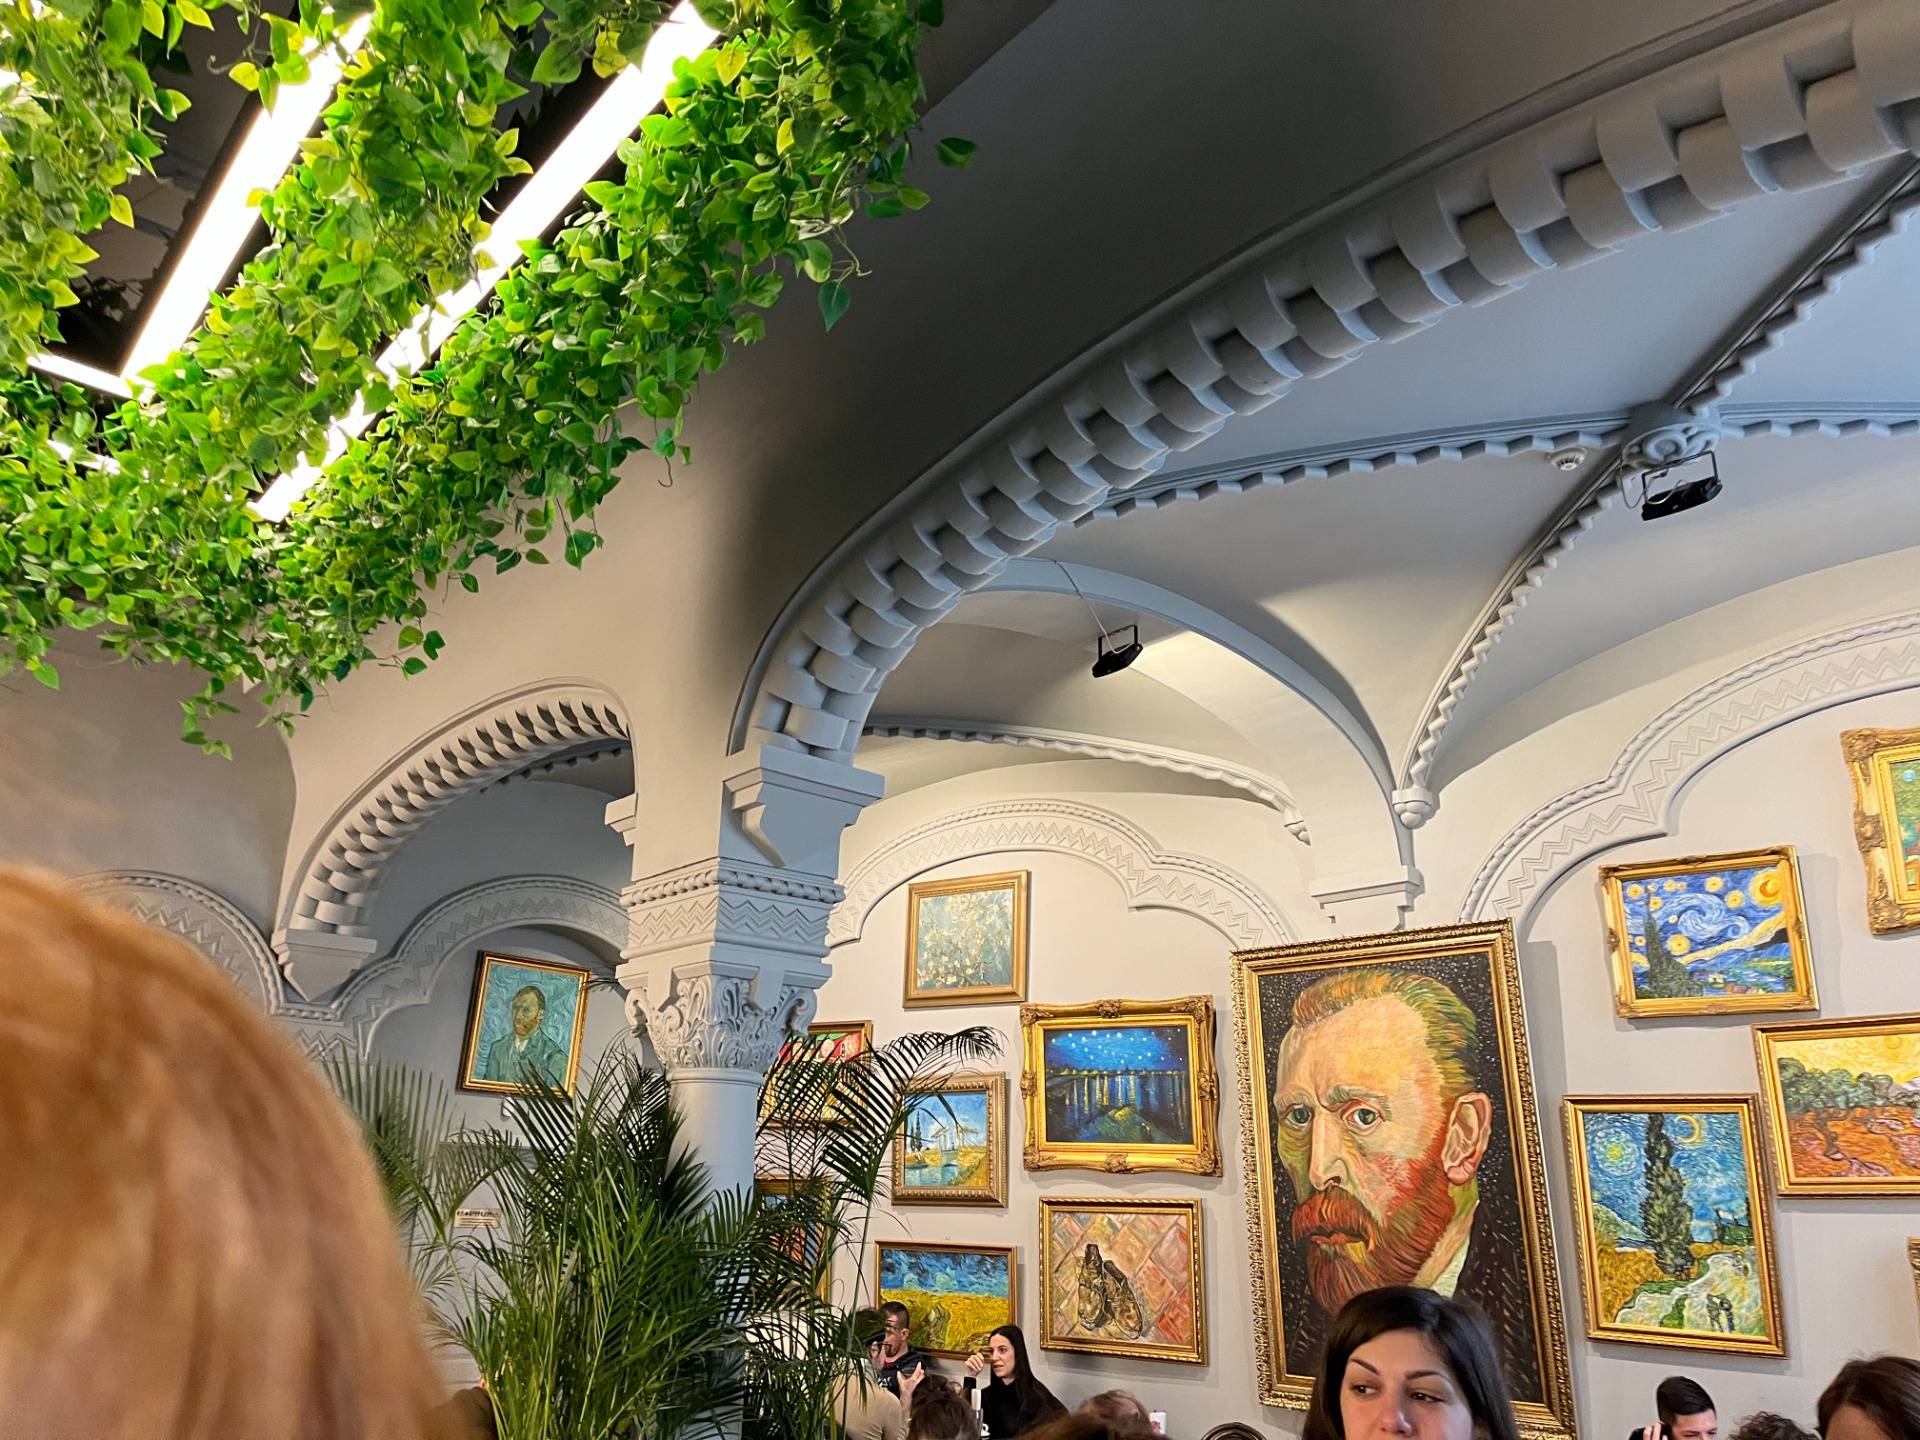 The Van Gogh Cafe. Romulus unfortunately unpictured.